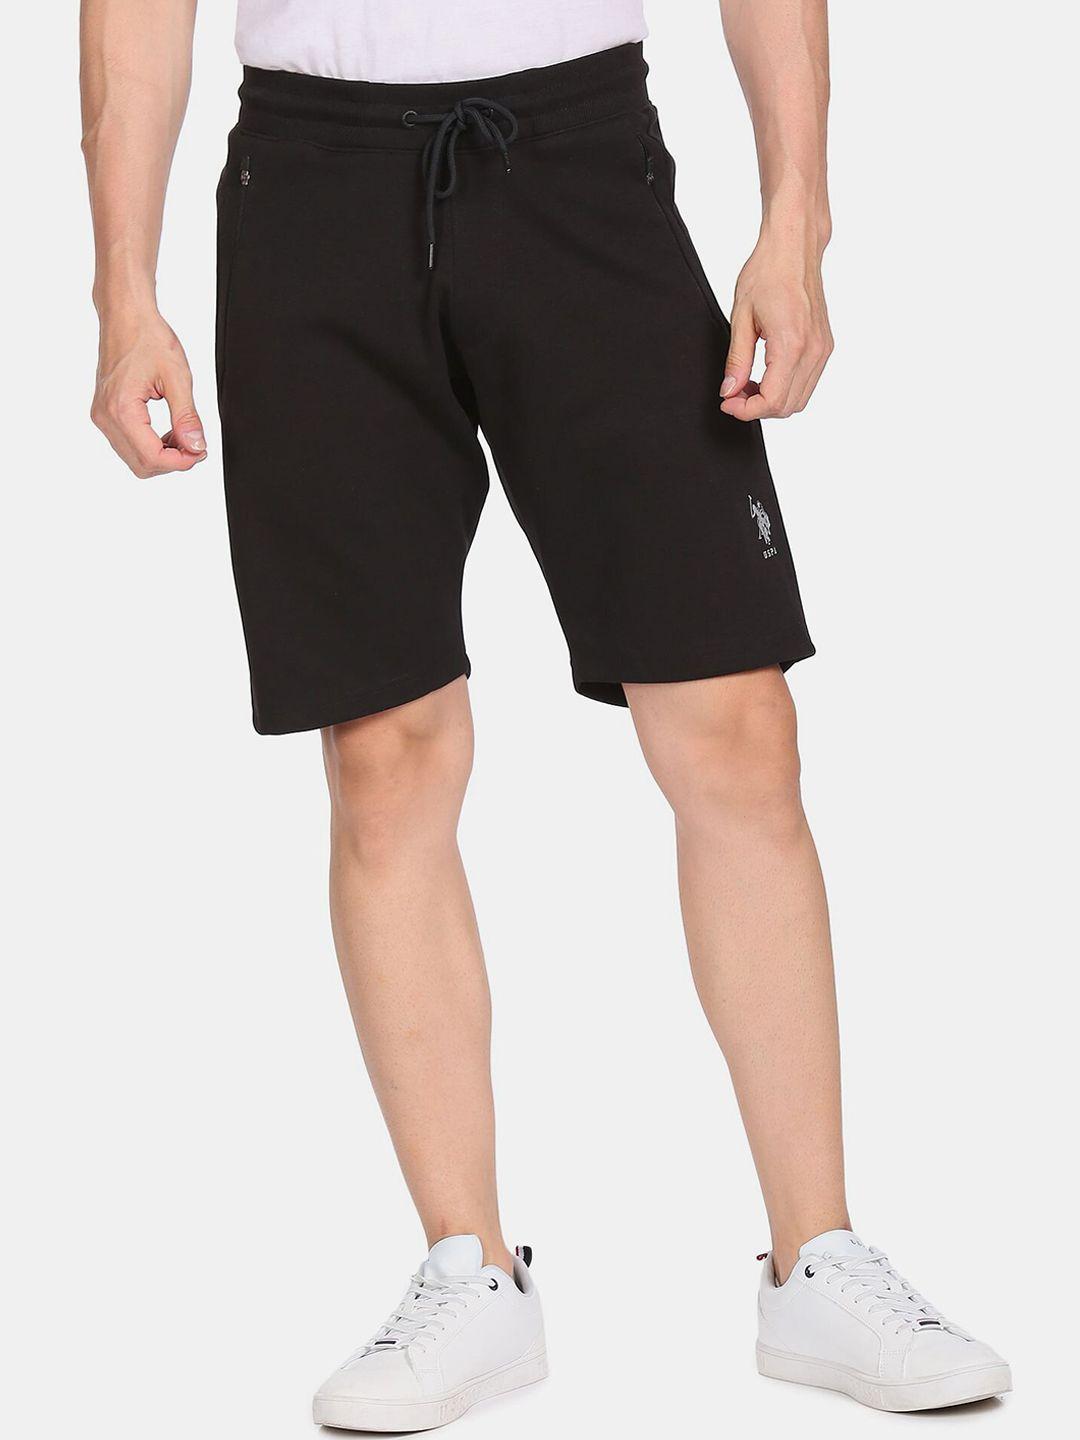 u.s. polo assn. men black mid rise solid shorts